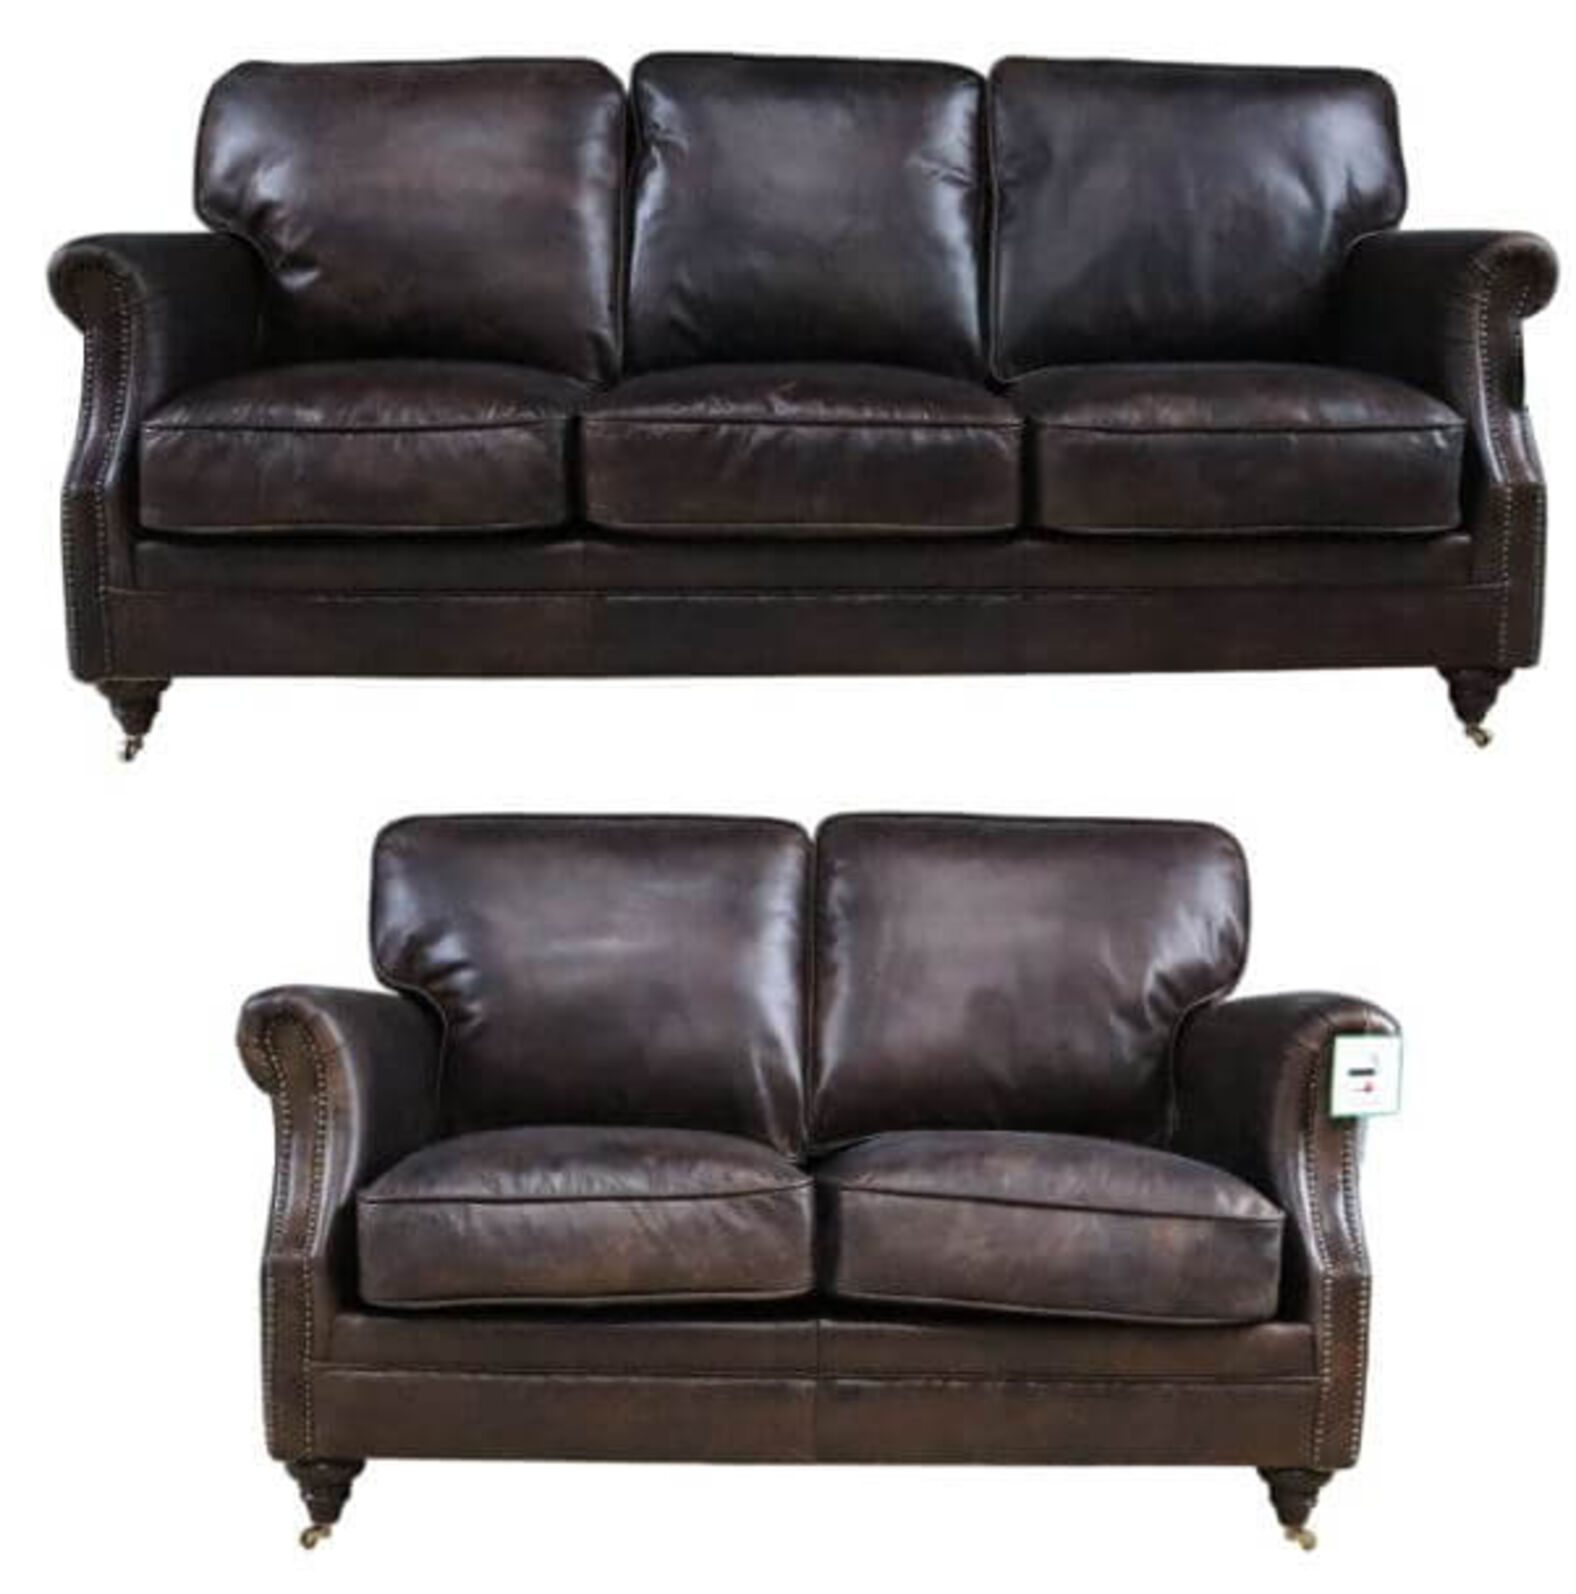 Luxury Vintage 3 2 Seater Settee Sofa, Distressed Brown Leather Sofa